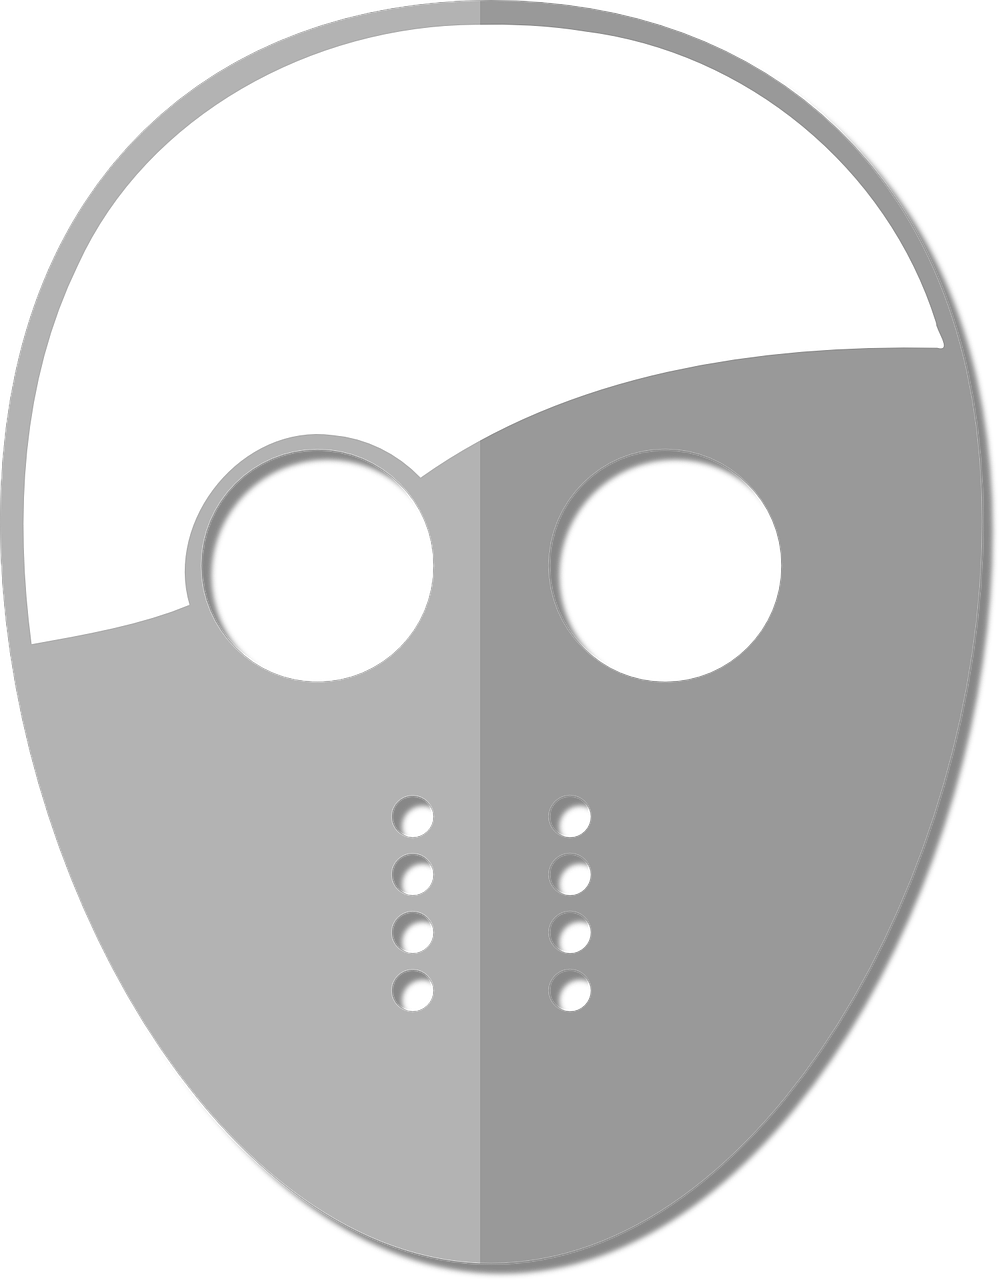 Friday Hockey Goalie Mask Vector PNG image